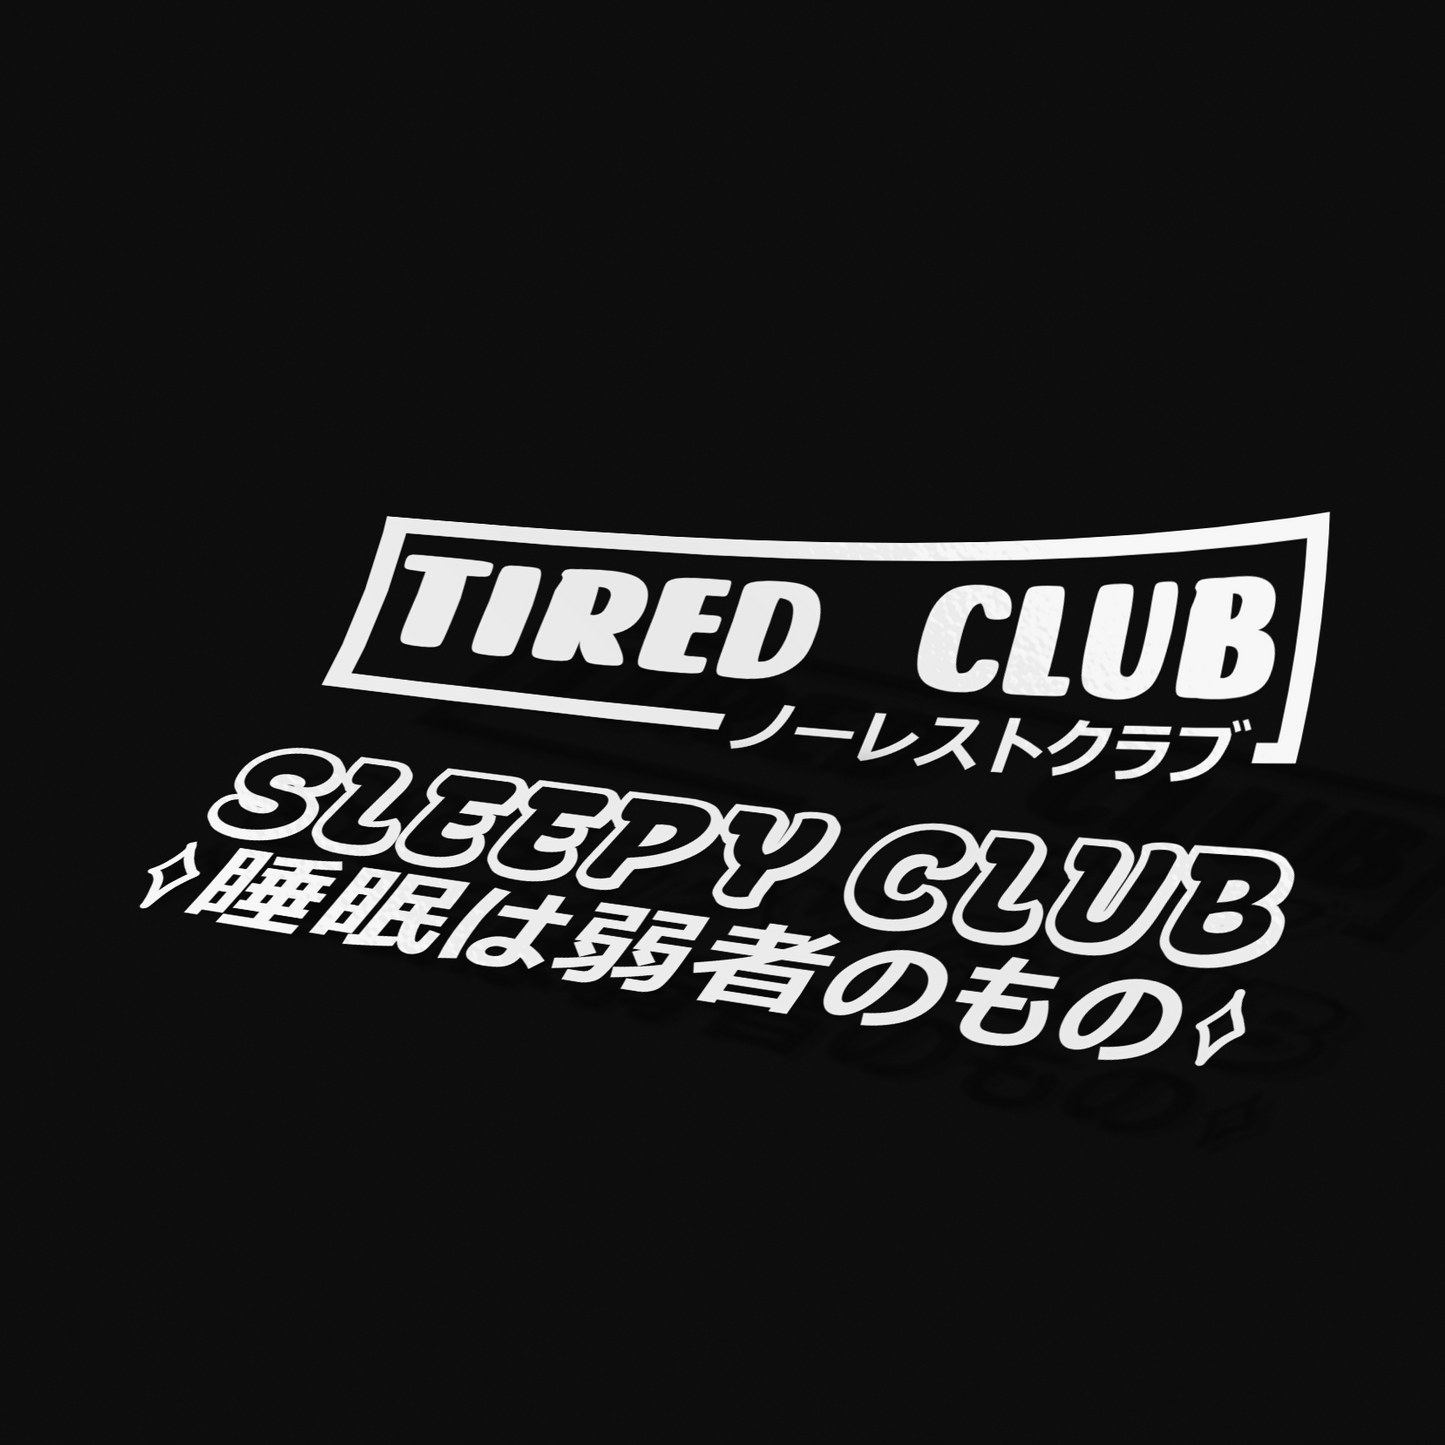 TIRED CLUB